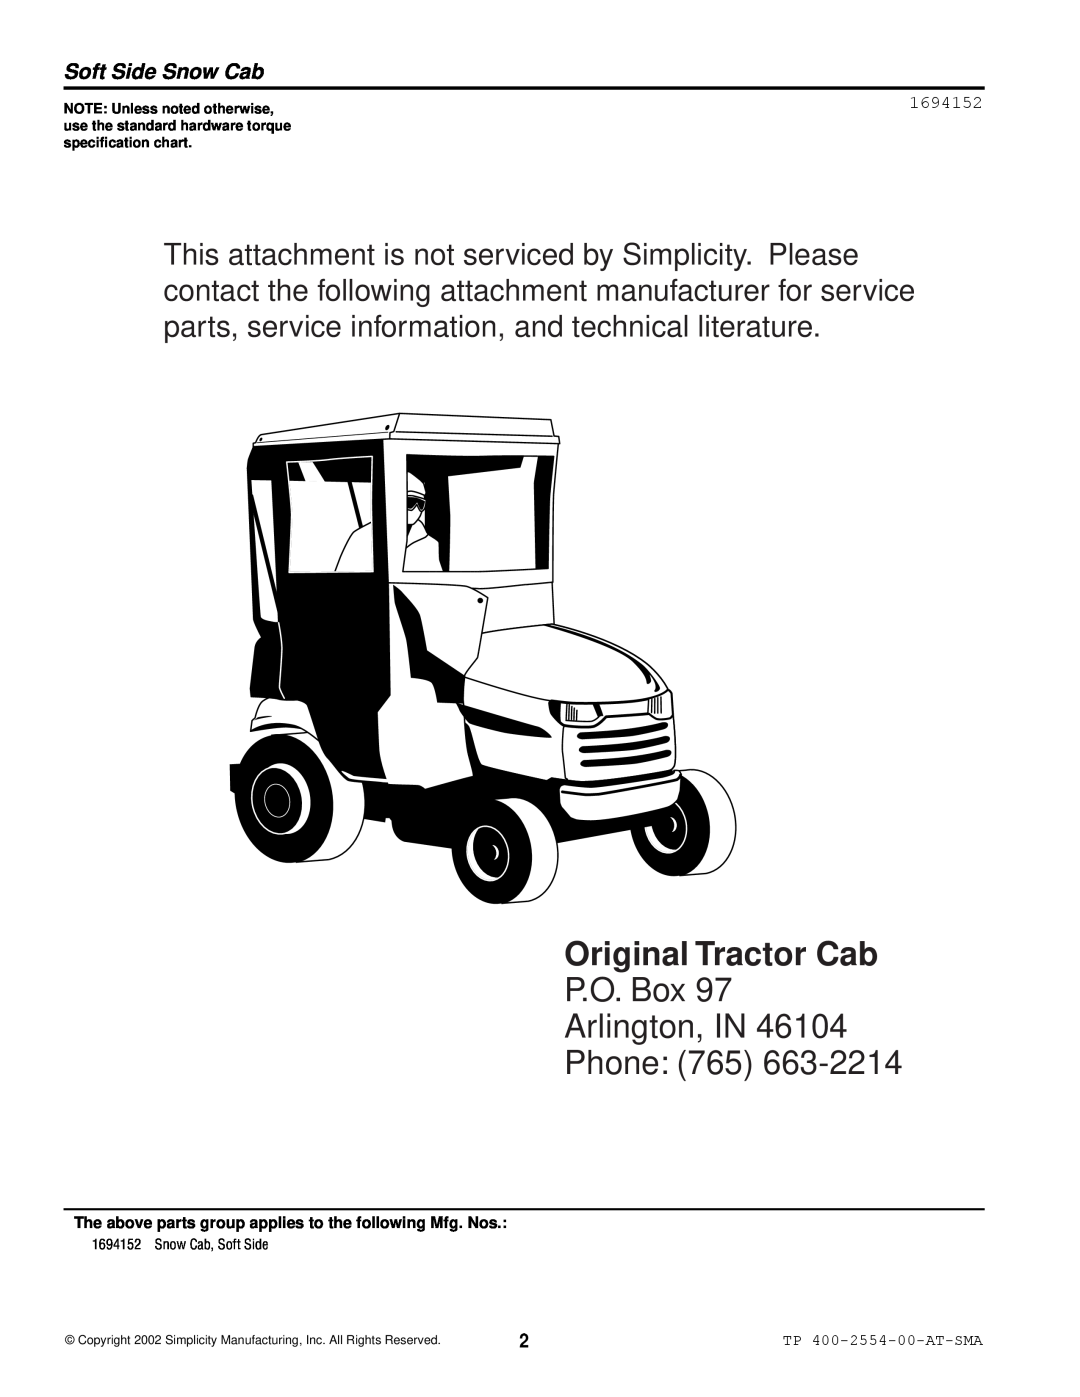 Simplicity 1694152 manual TP 400-2554-00-AT-SMA, Original Tractor Cab, P.O. Box Arlington, IN Phone, Soft Side Snow Cab 